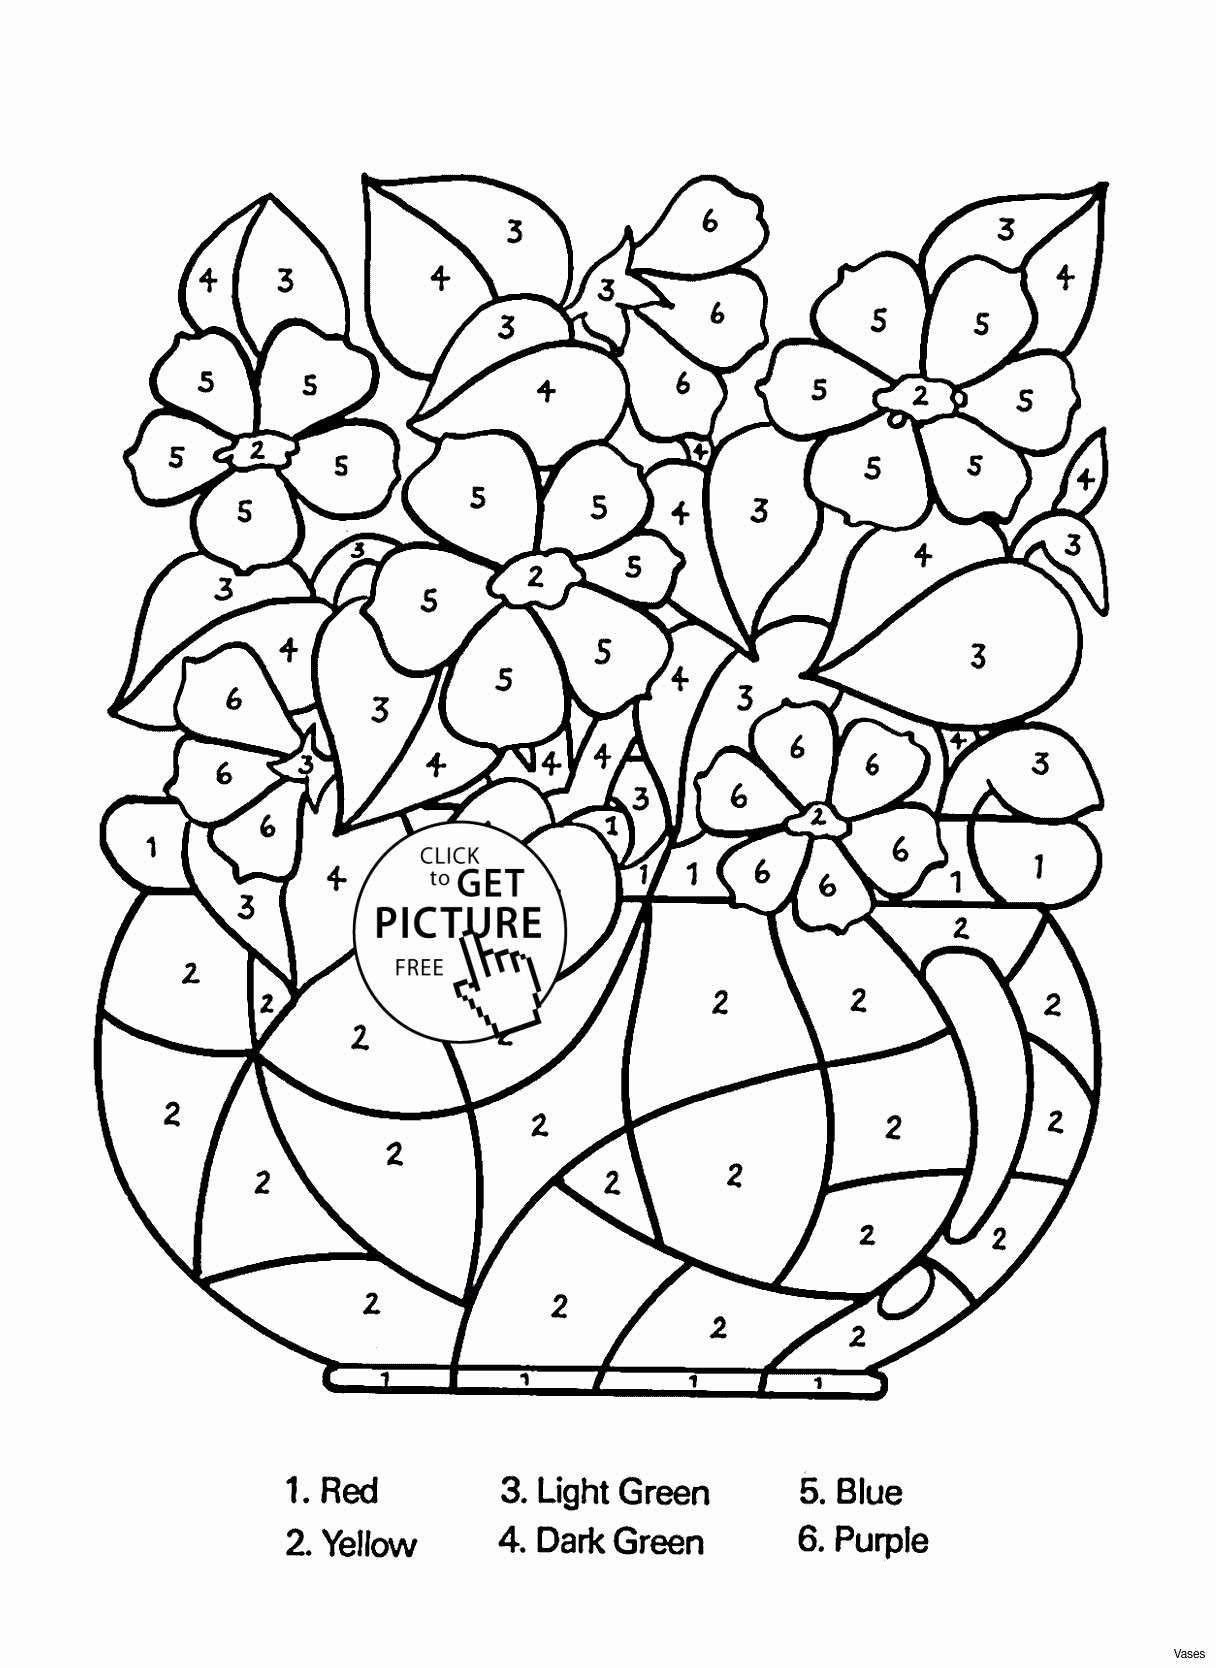 chinese dragon vase of white glass vase elegant vases flower vase coloring page pages throughout white glass vase elegant vases flower vase coloring page pages flowers in a top i 0d